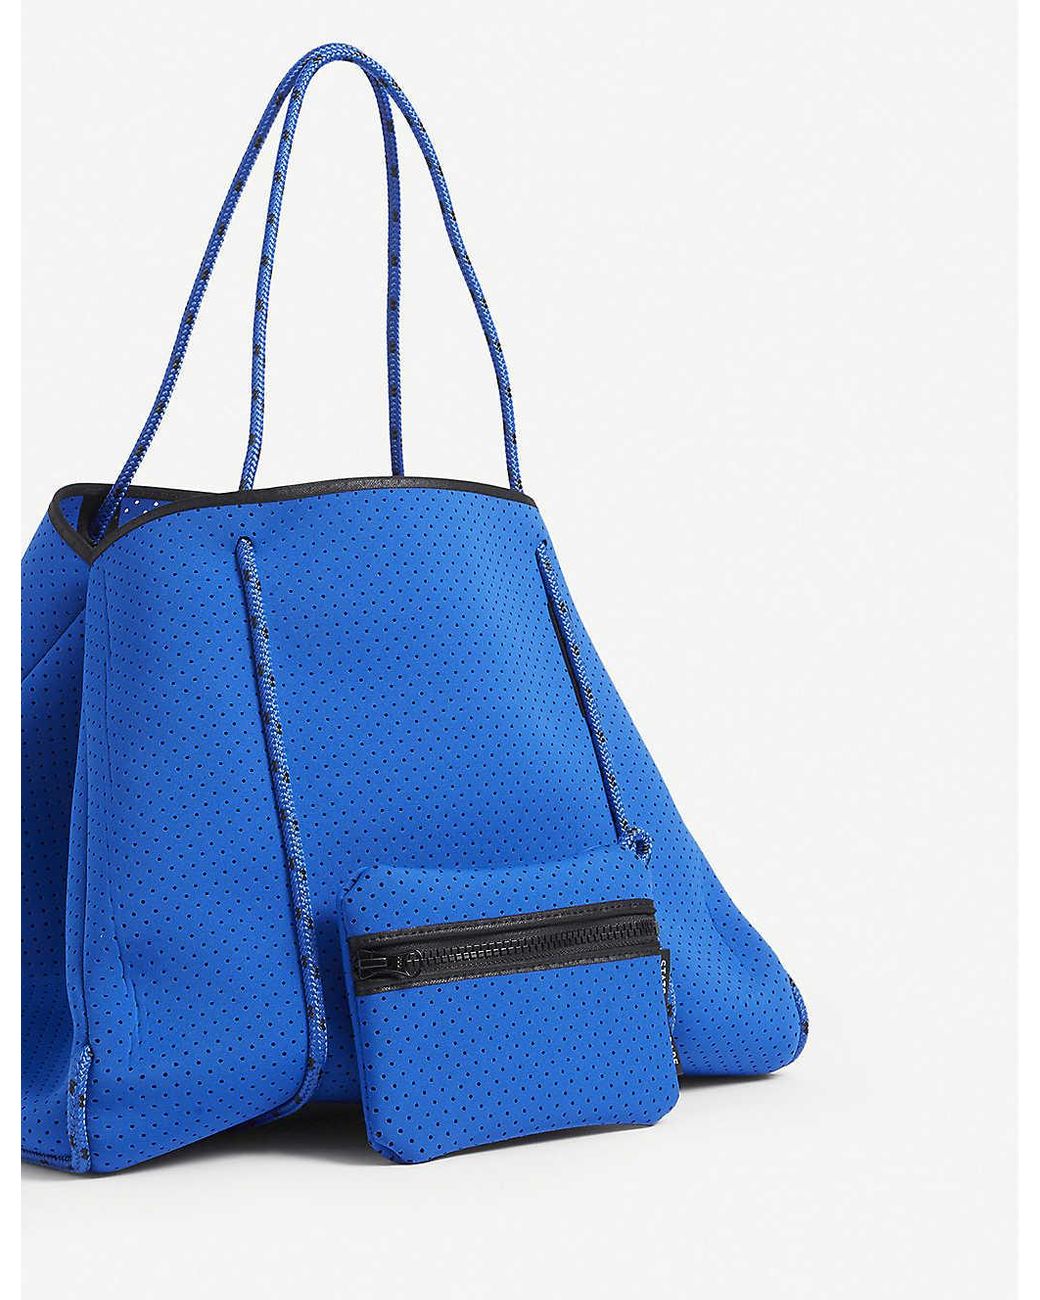 STATE OF ESCAPE Electric Blue Escape Neoprene Tote Bag 1 Size | Lyst